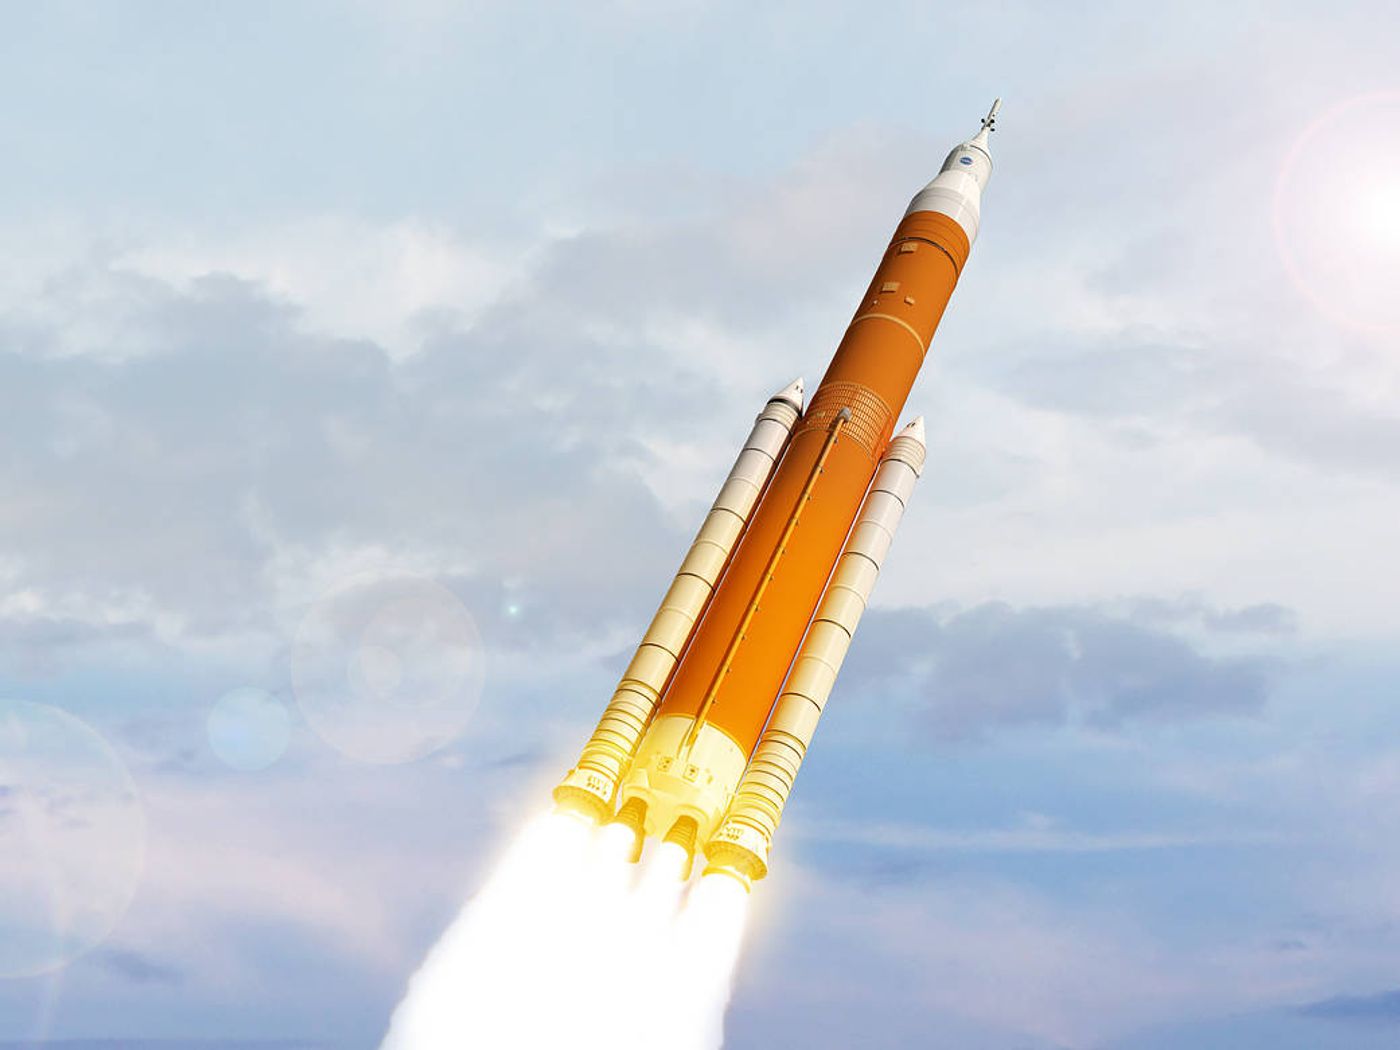 An artist's impression of NASA's completed SLS rocket.